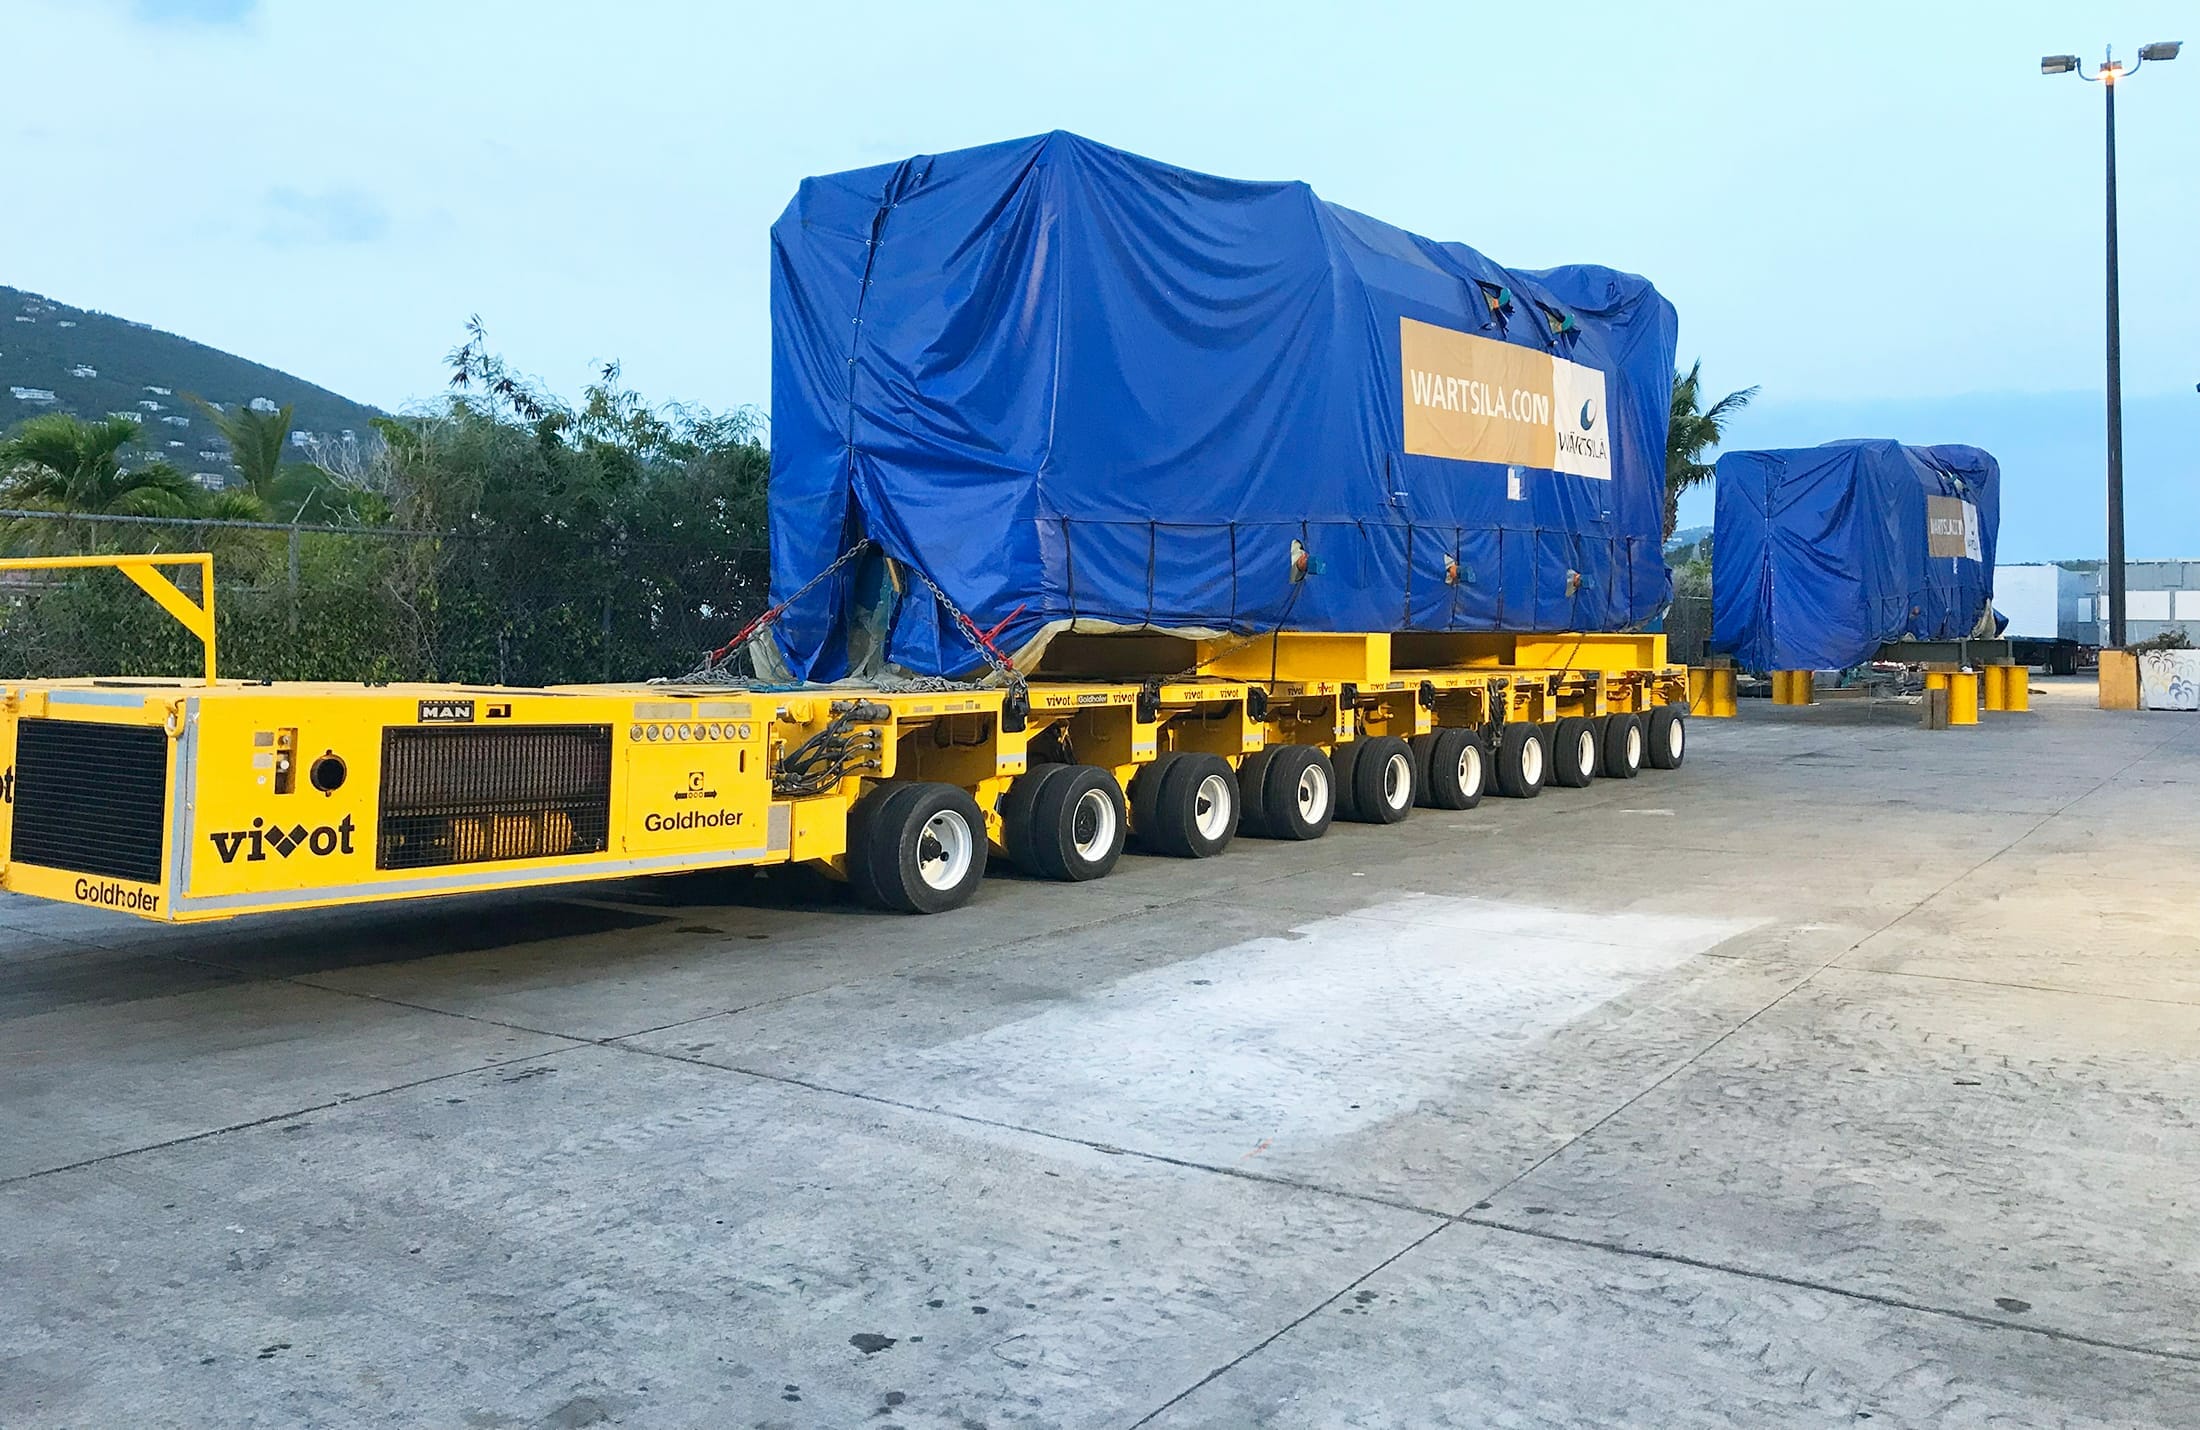 multi-wheeled equipment hauling heavy load